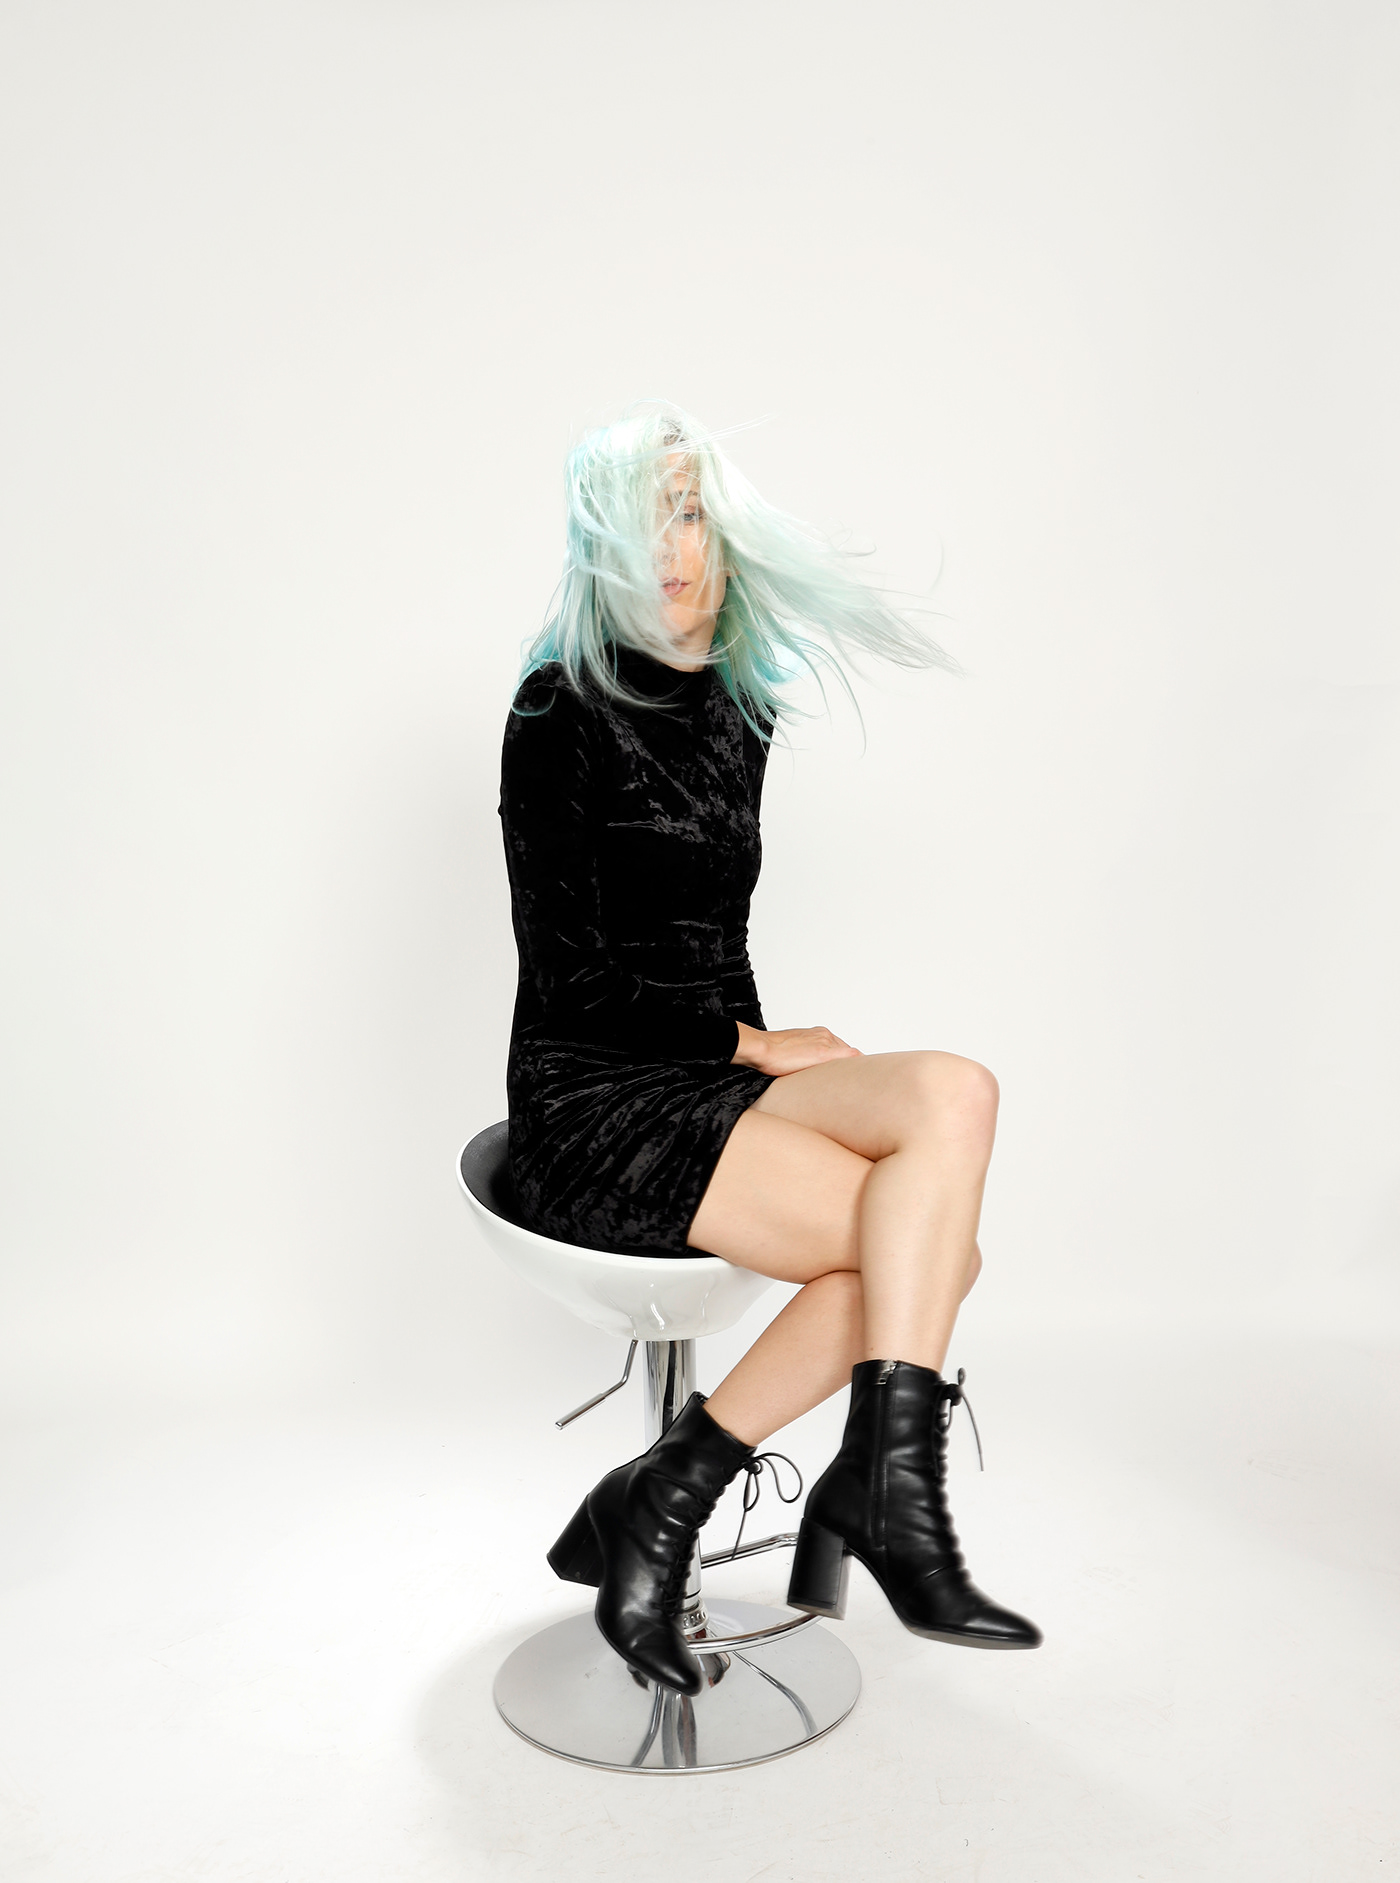 artist beauty blue hair editorial Fashion  model Photography  photoshoot portrait Singer